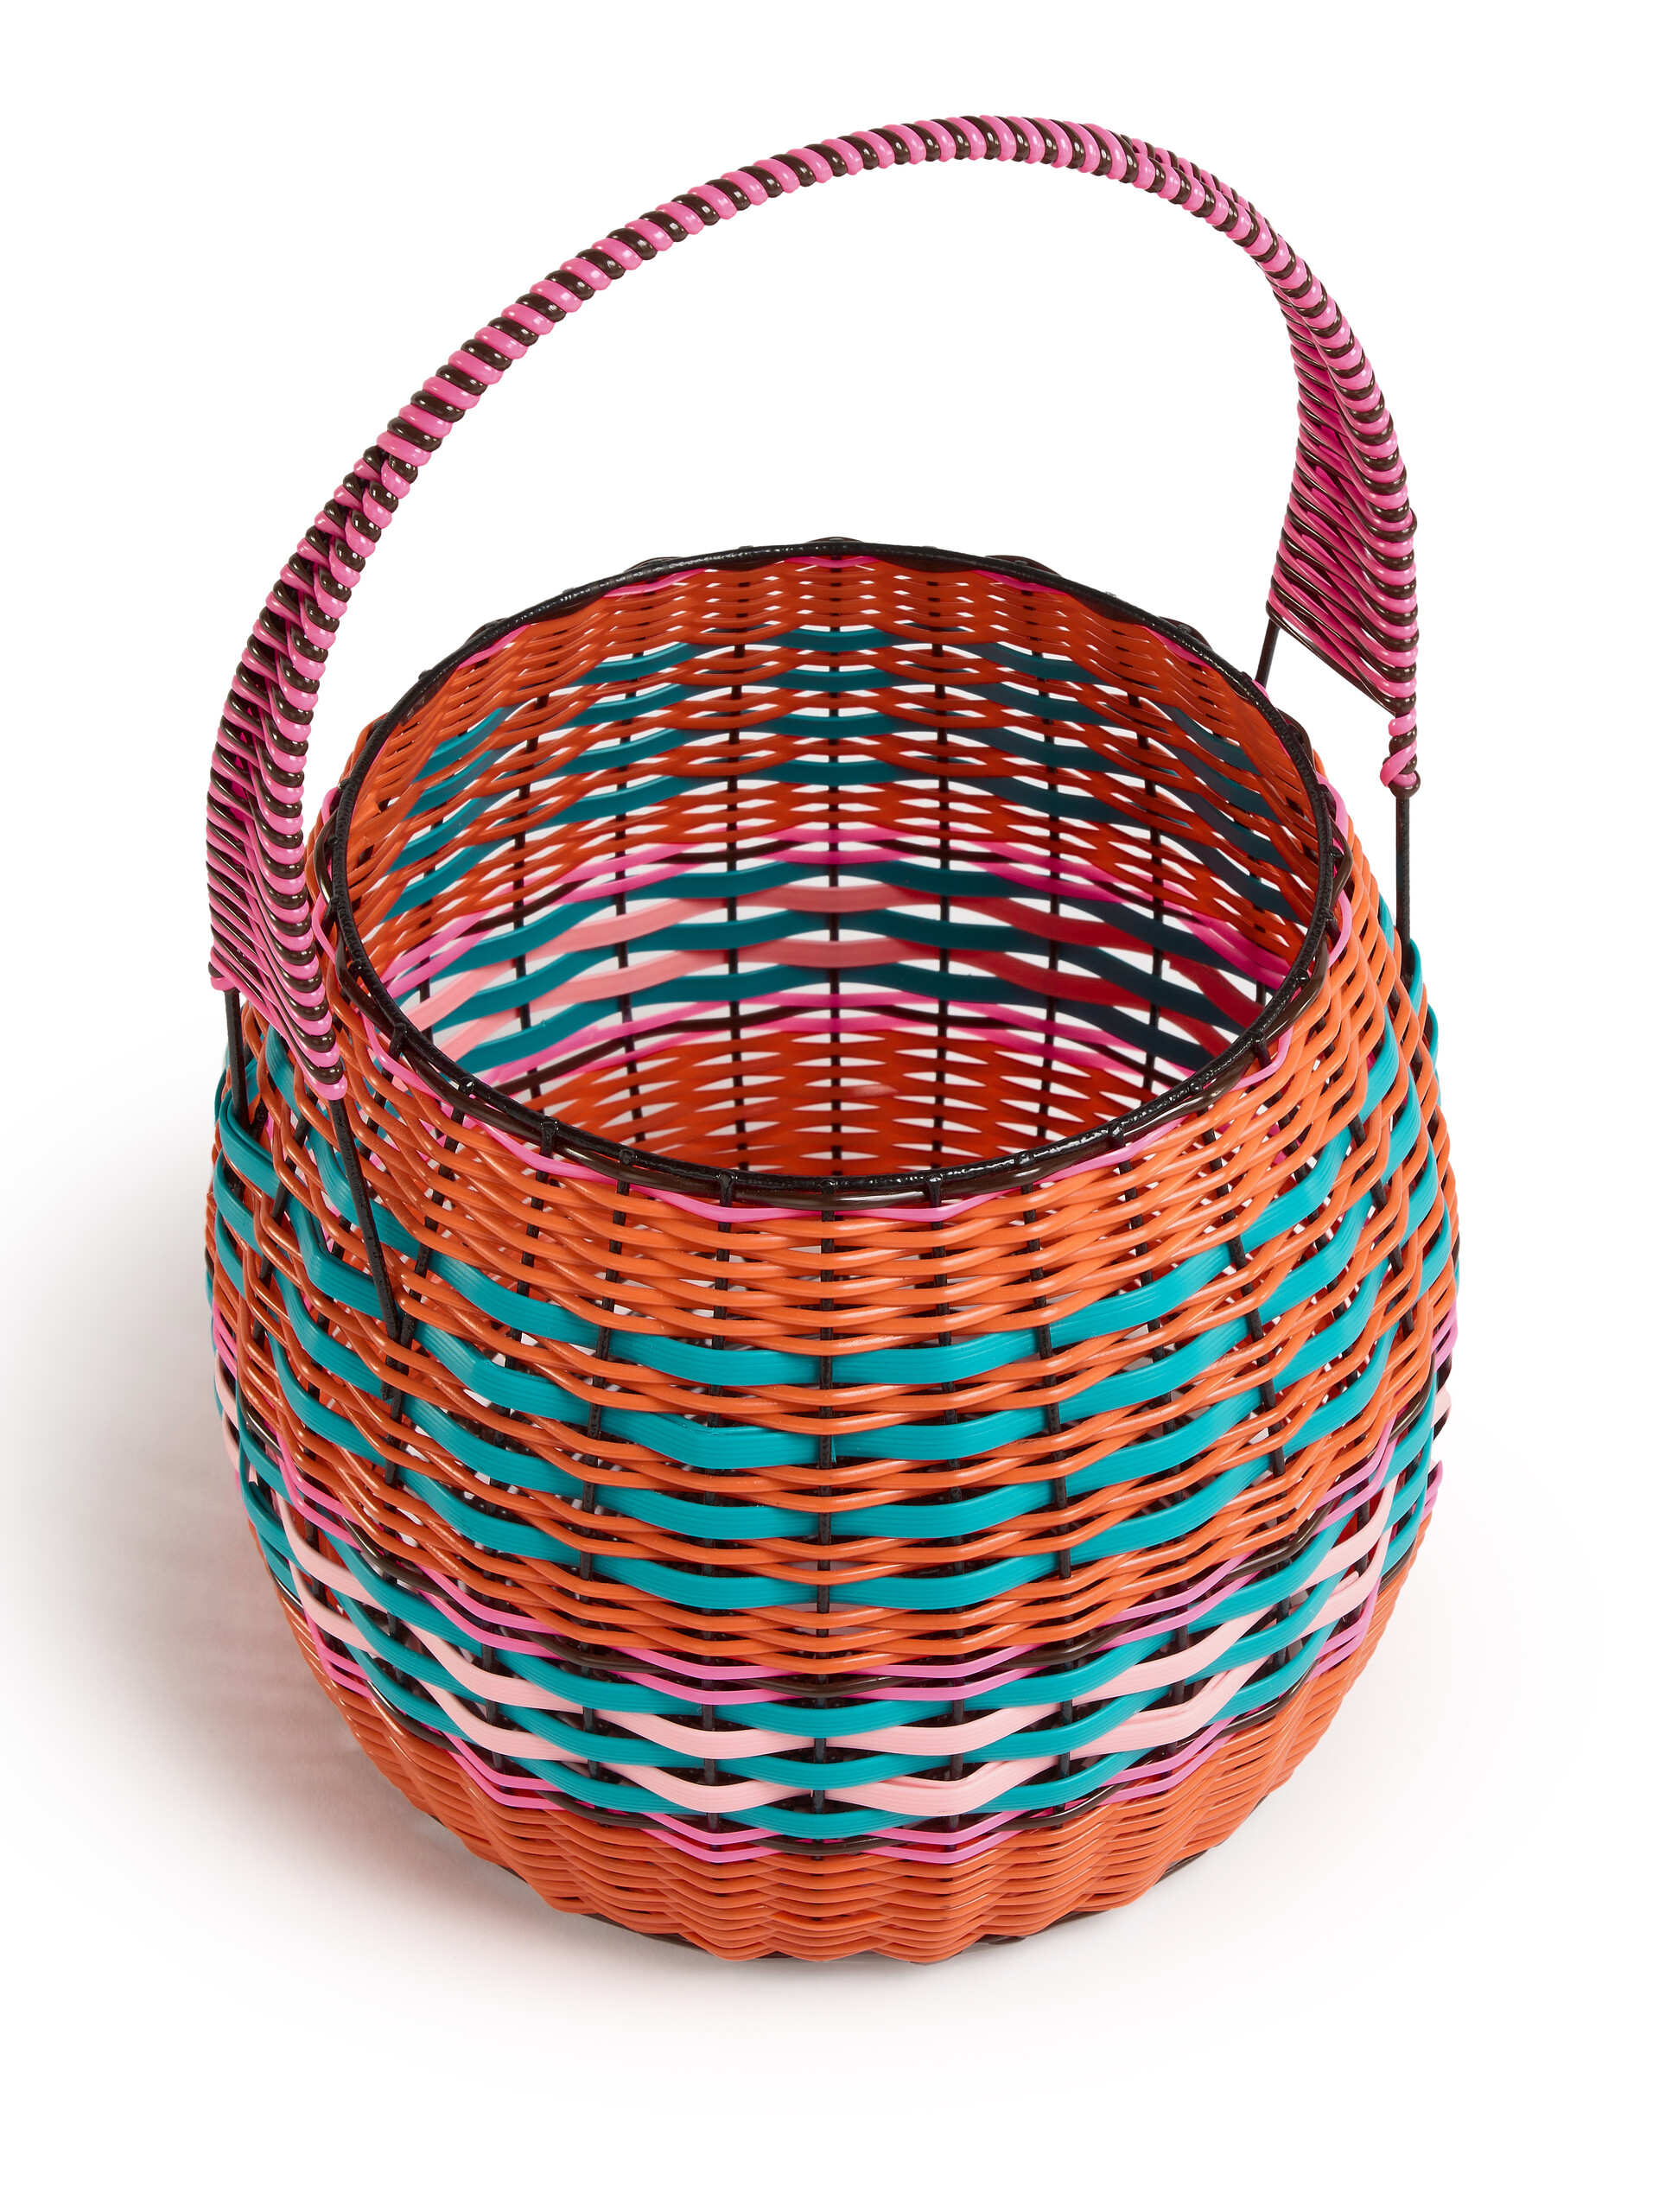 Orange MARNI MARKET woven cable basket - Accessories - Image 3